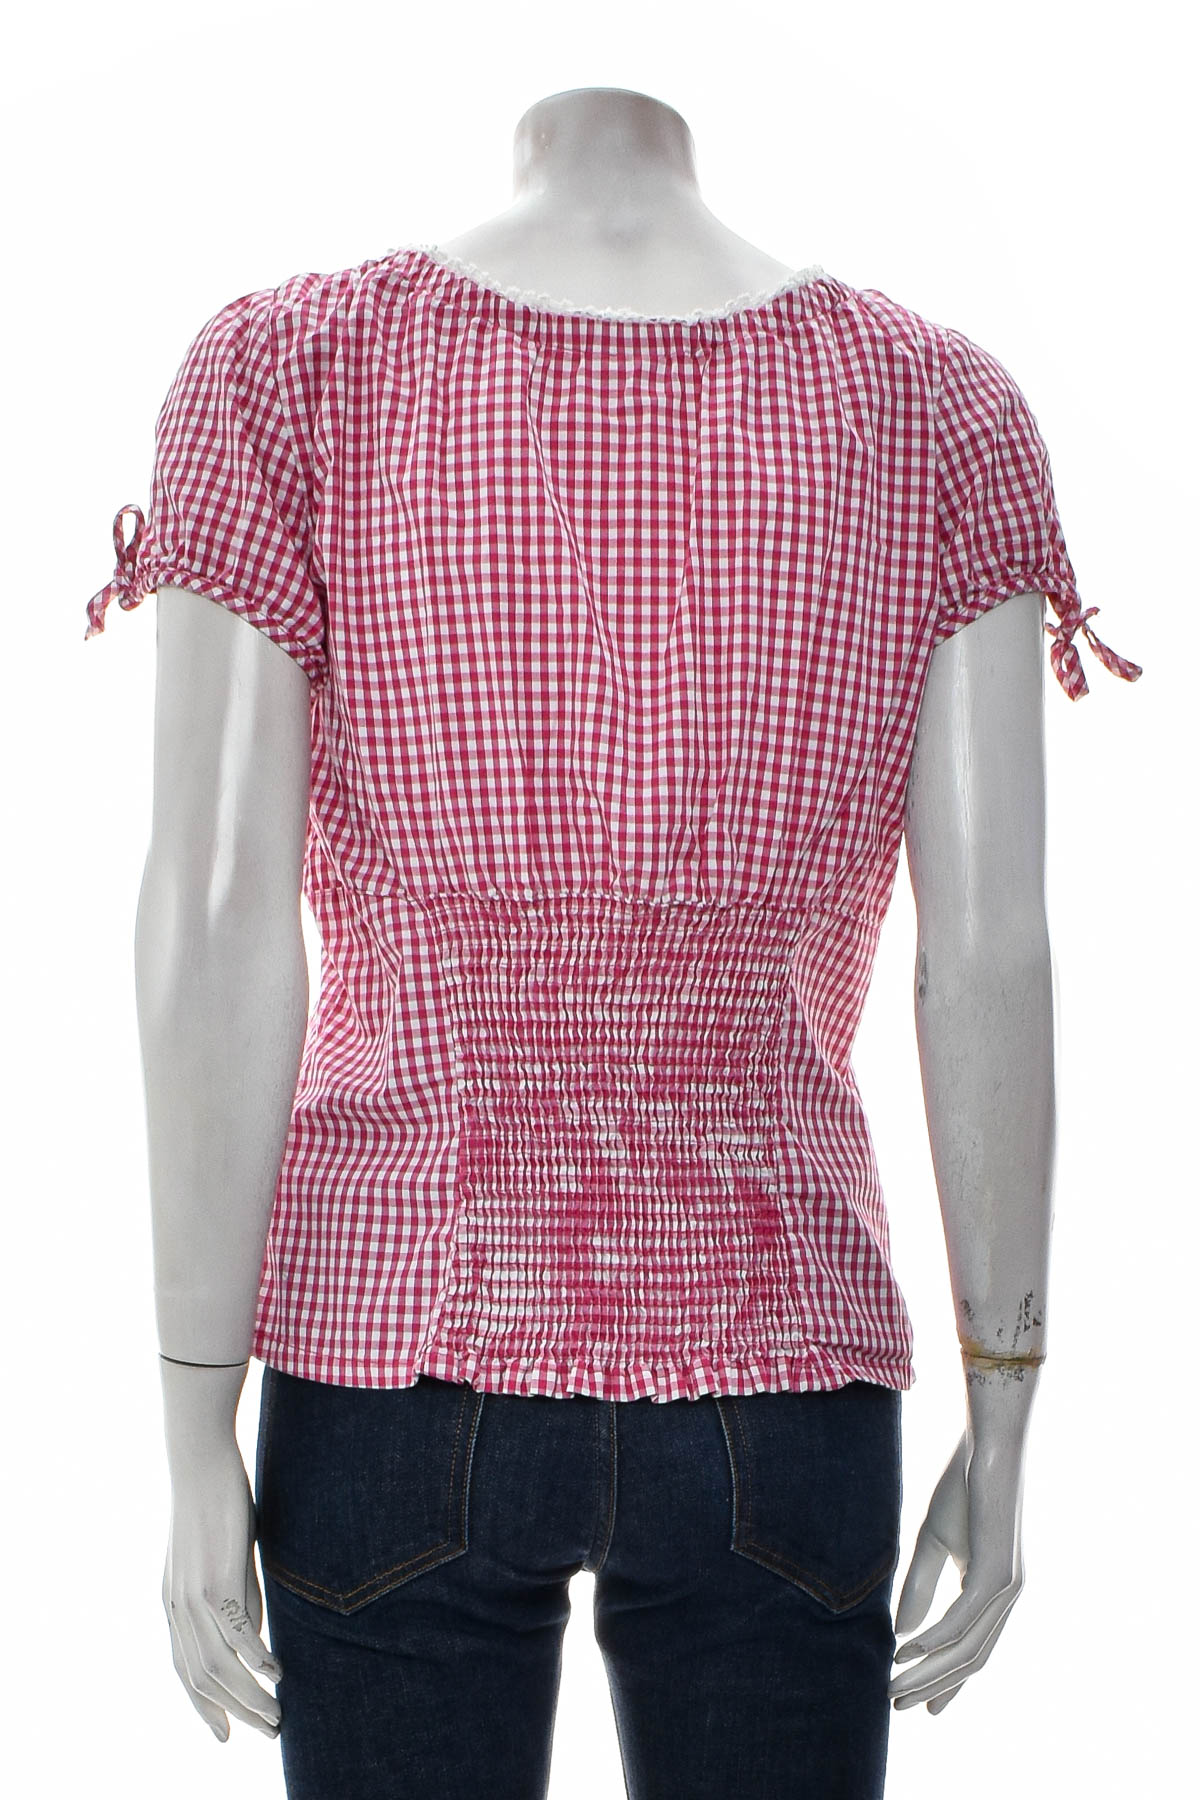 Women's shirt - Waldschutz - 1